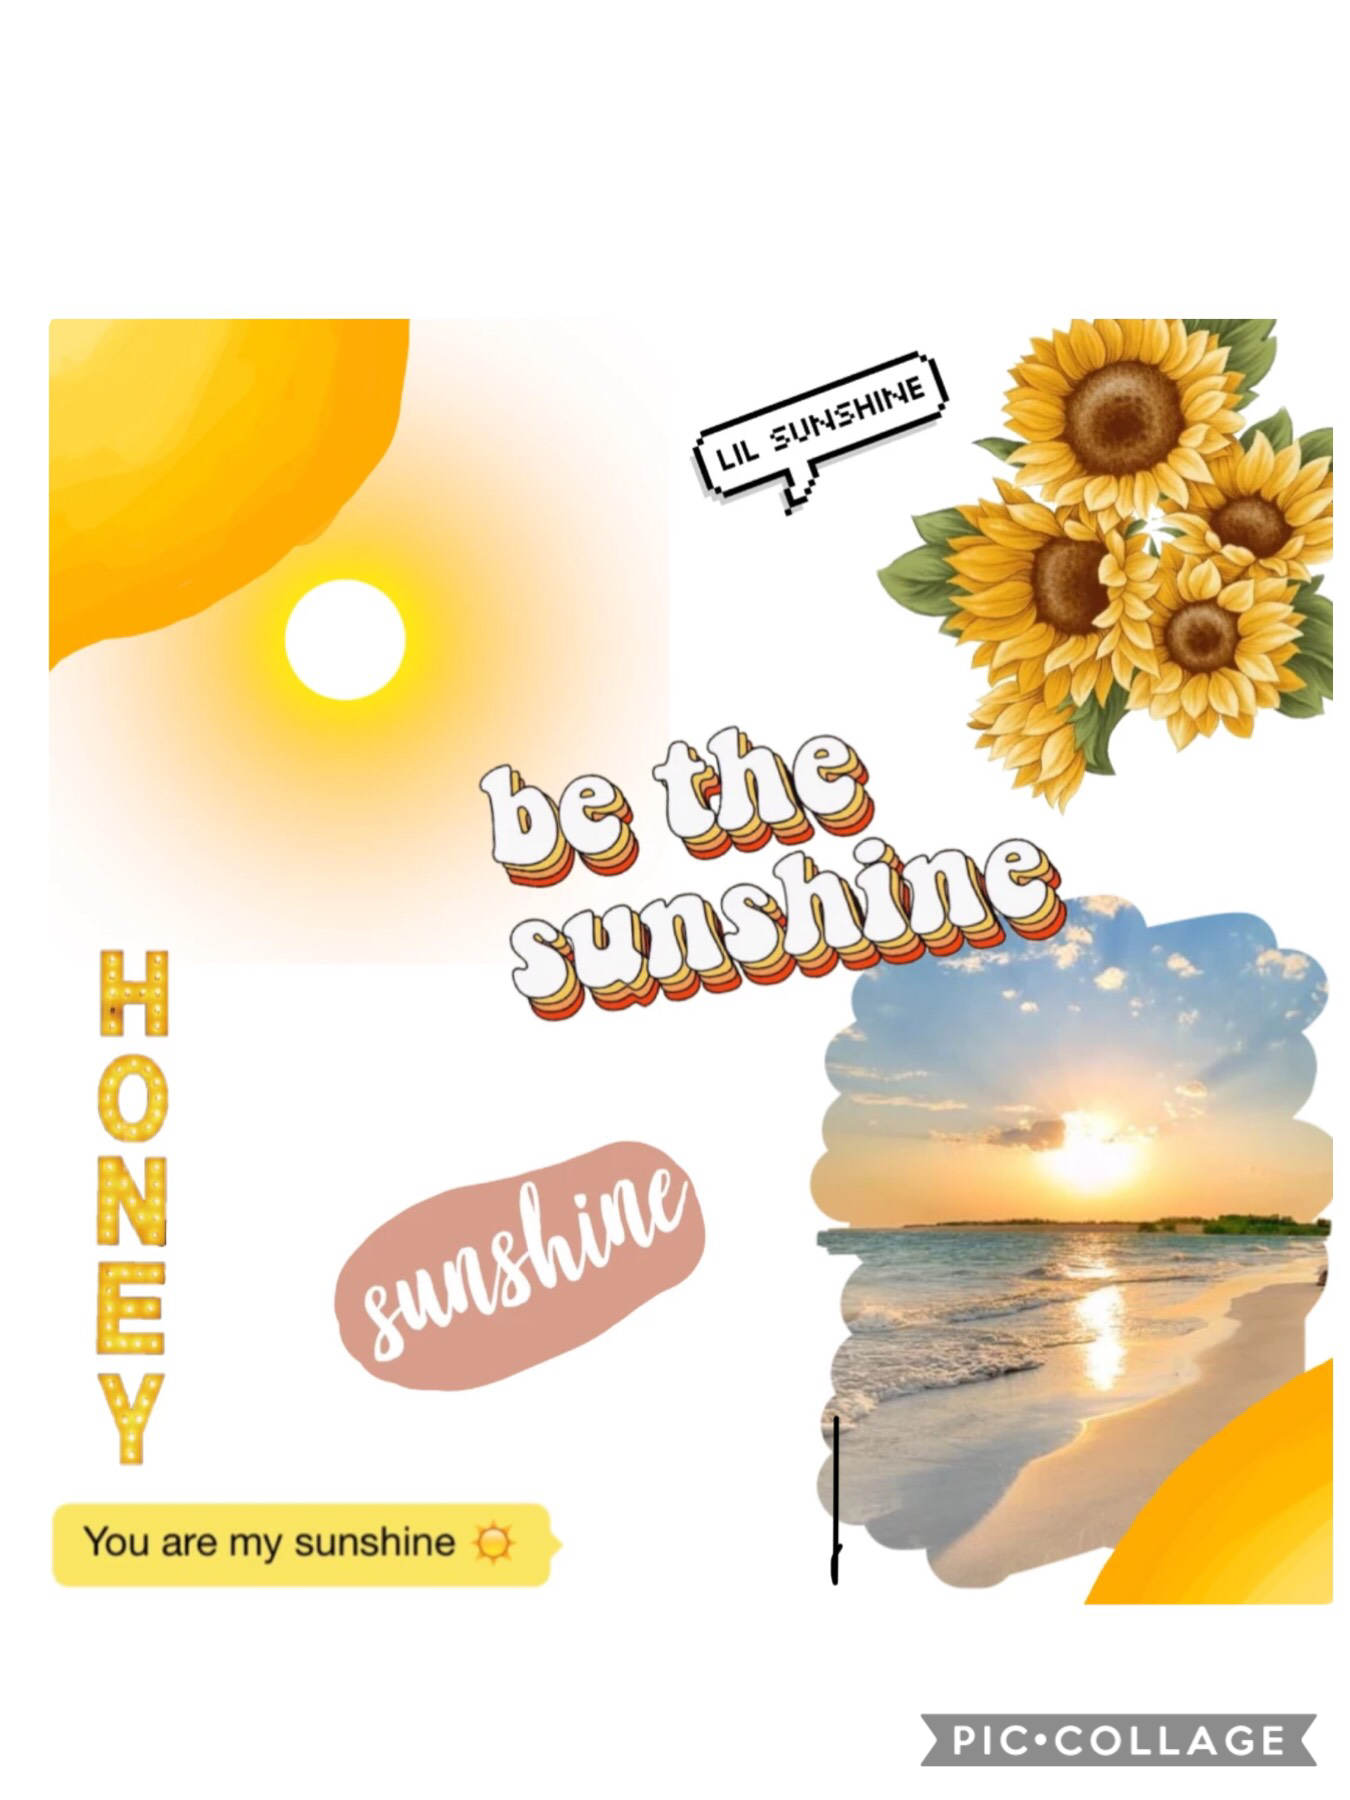 SUNSHINNEEEEEEE! 🌻 ☀️ 🌞 (my fave collage theme!)